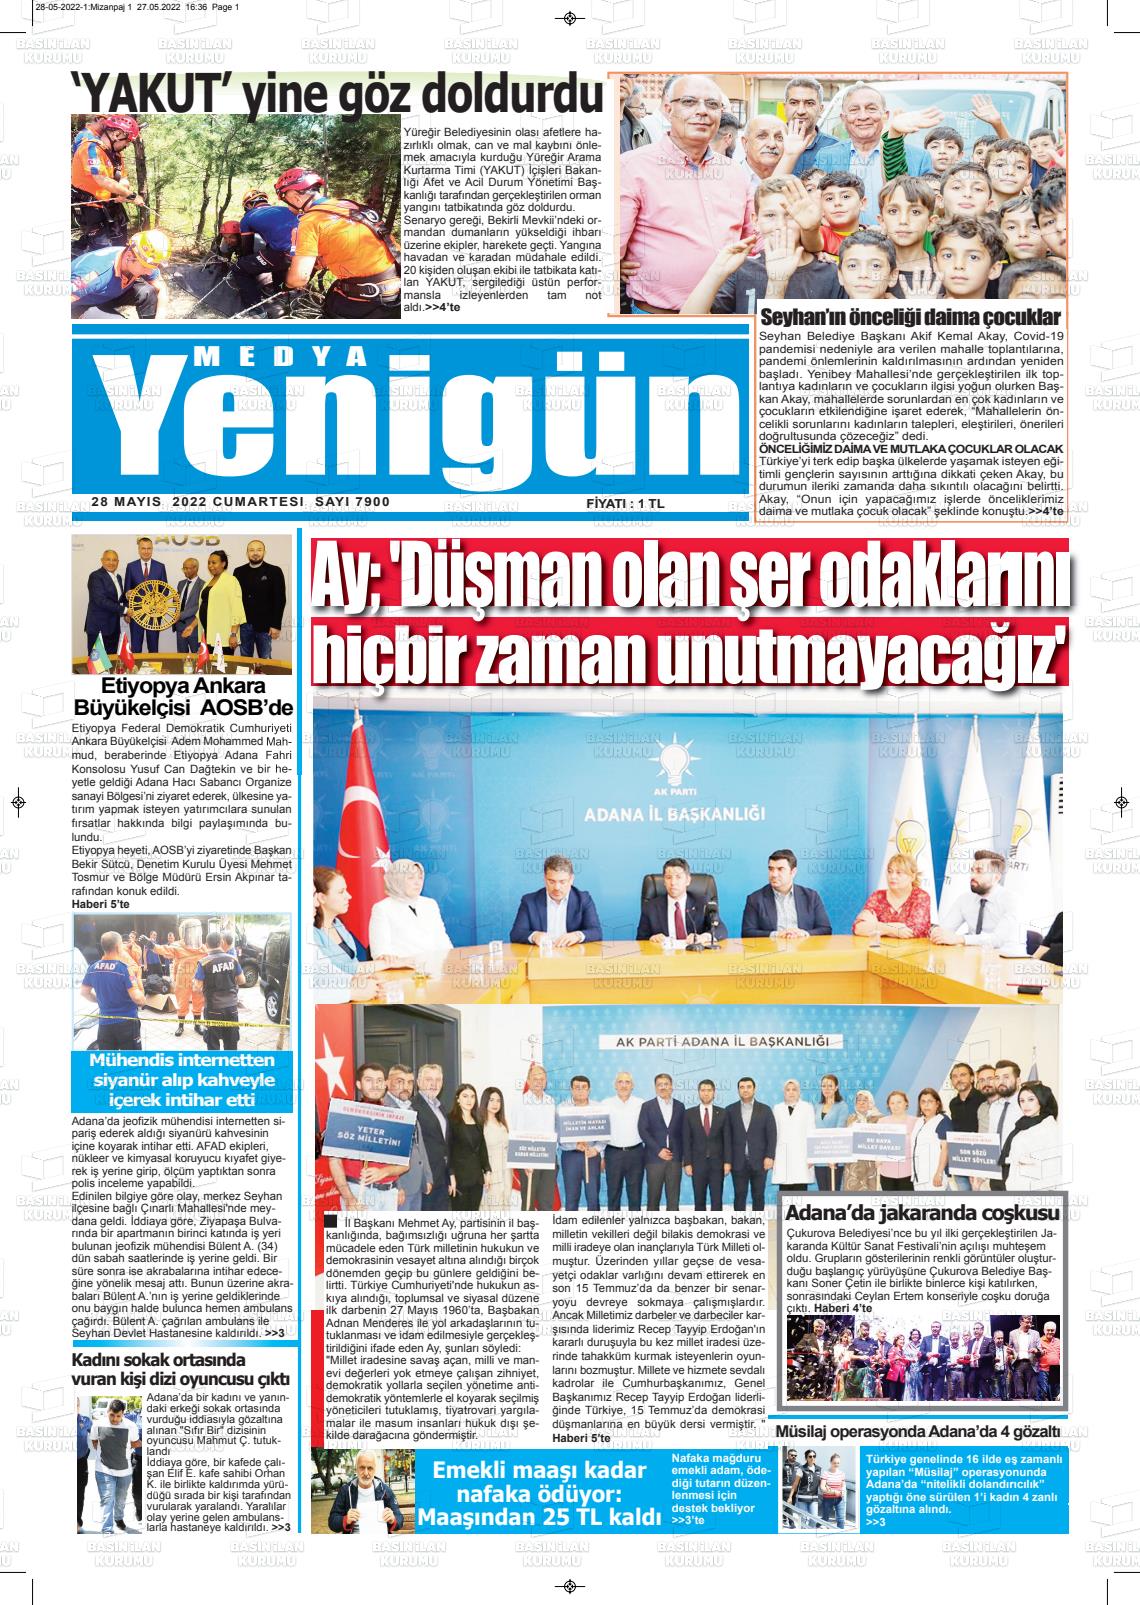 28 Mayıs 2022 Medya Yenigün Gazete Manşeti